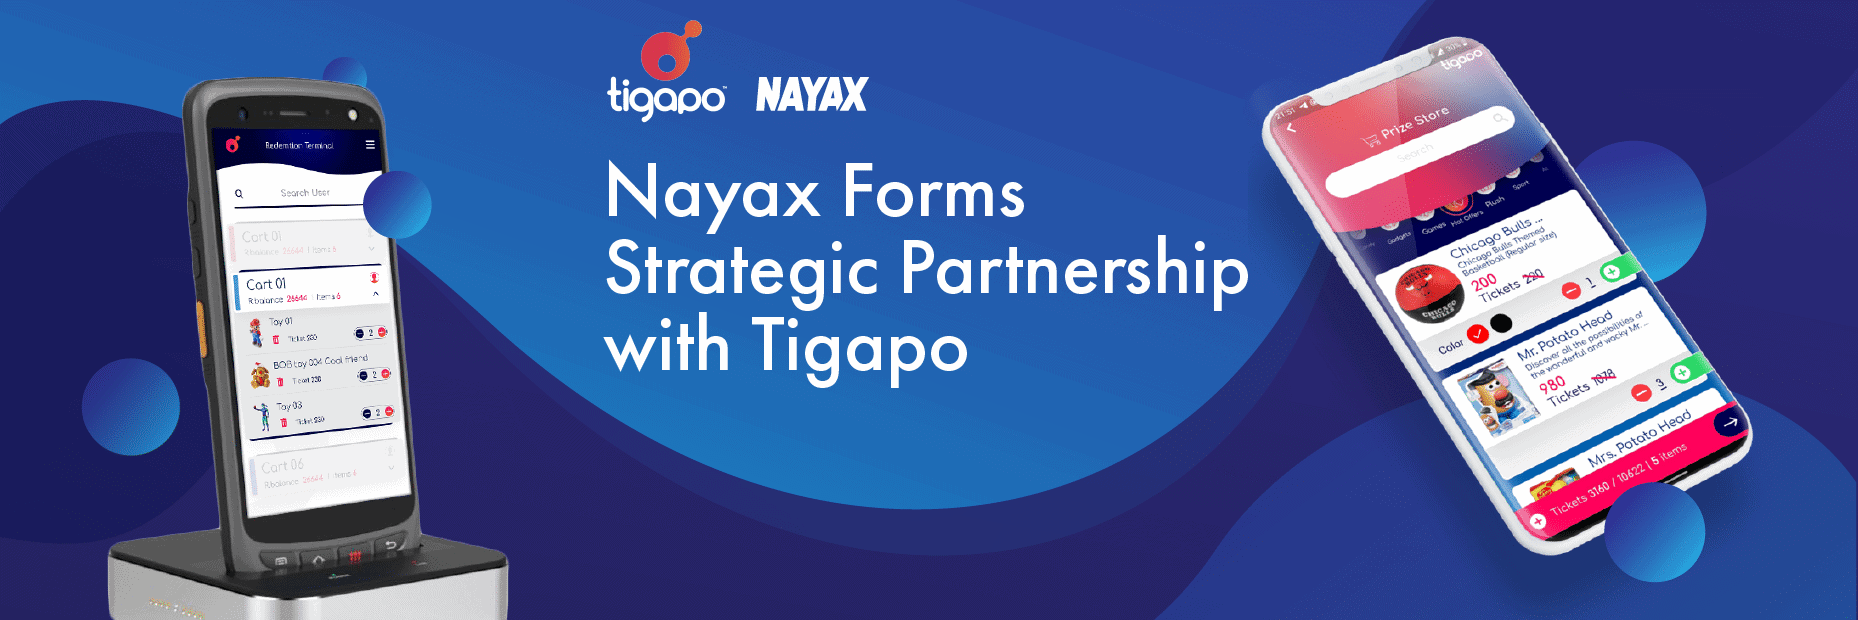 Tigapo partners Nayax cashless payment